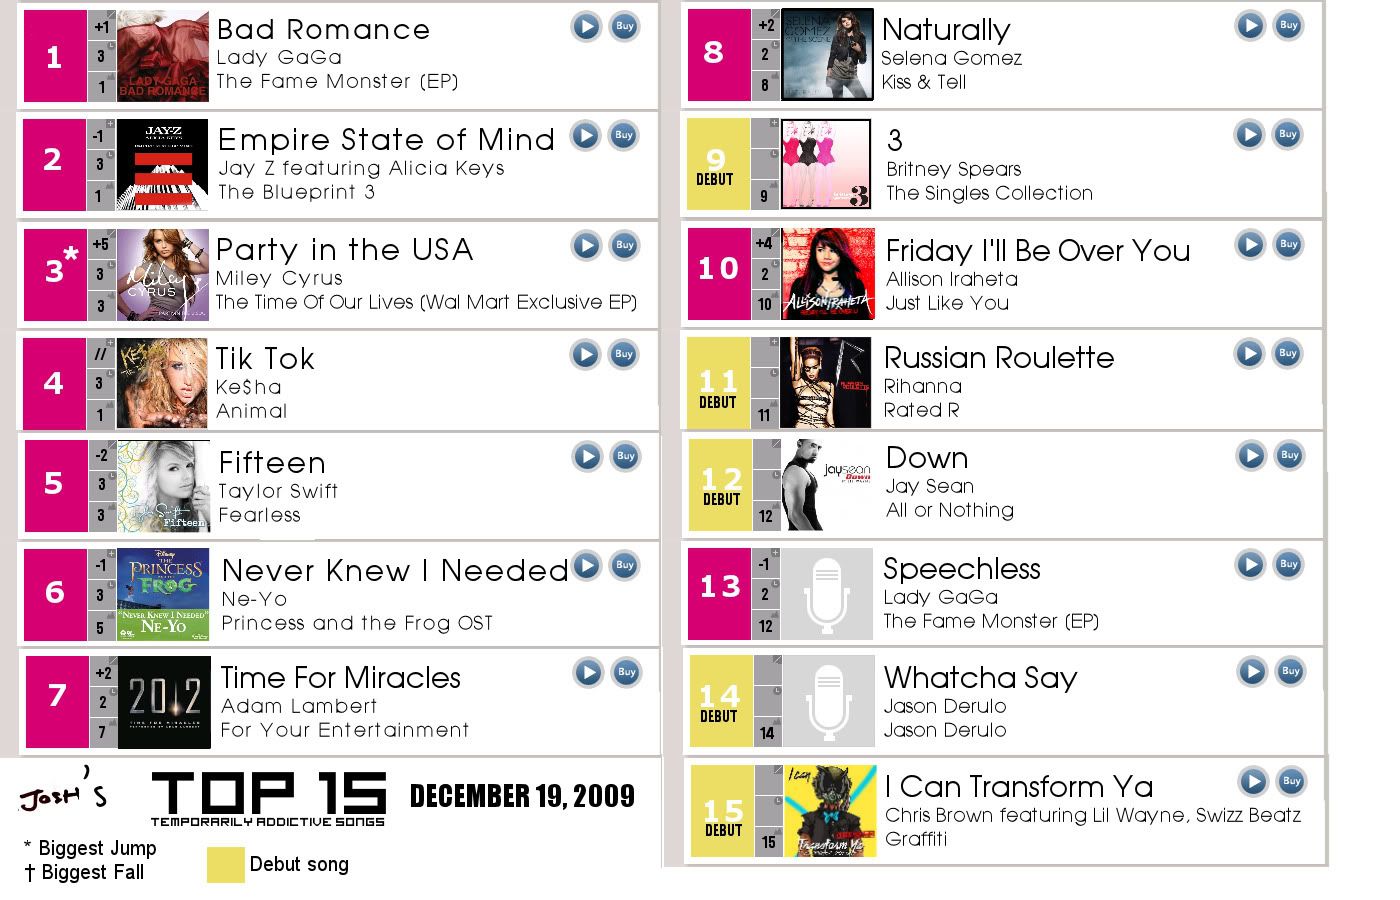 Top 10 Chart Songs 2009